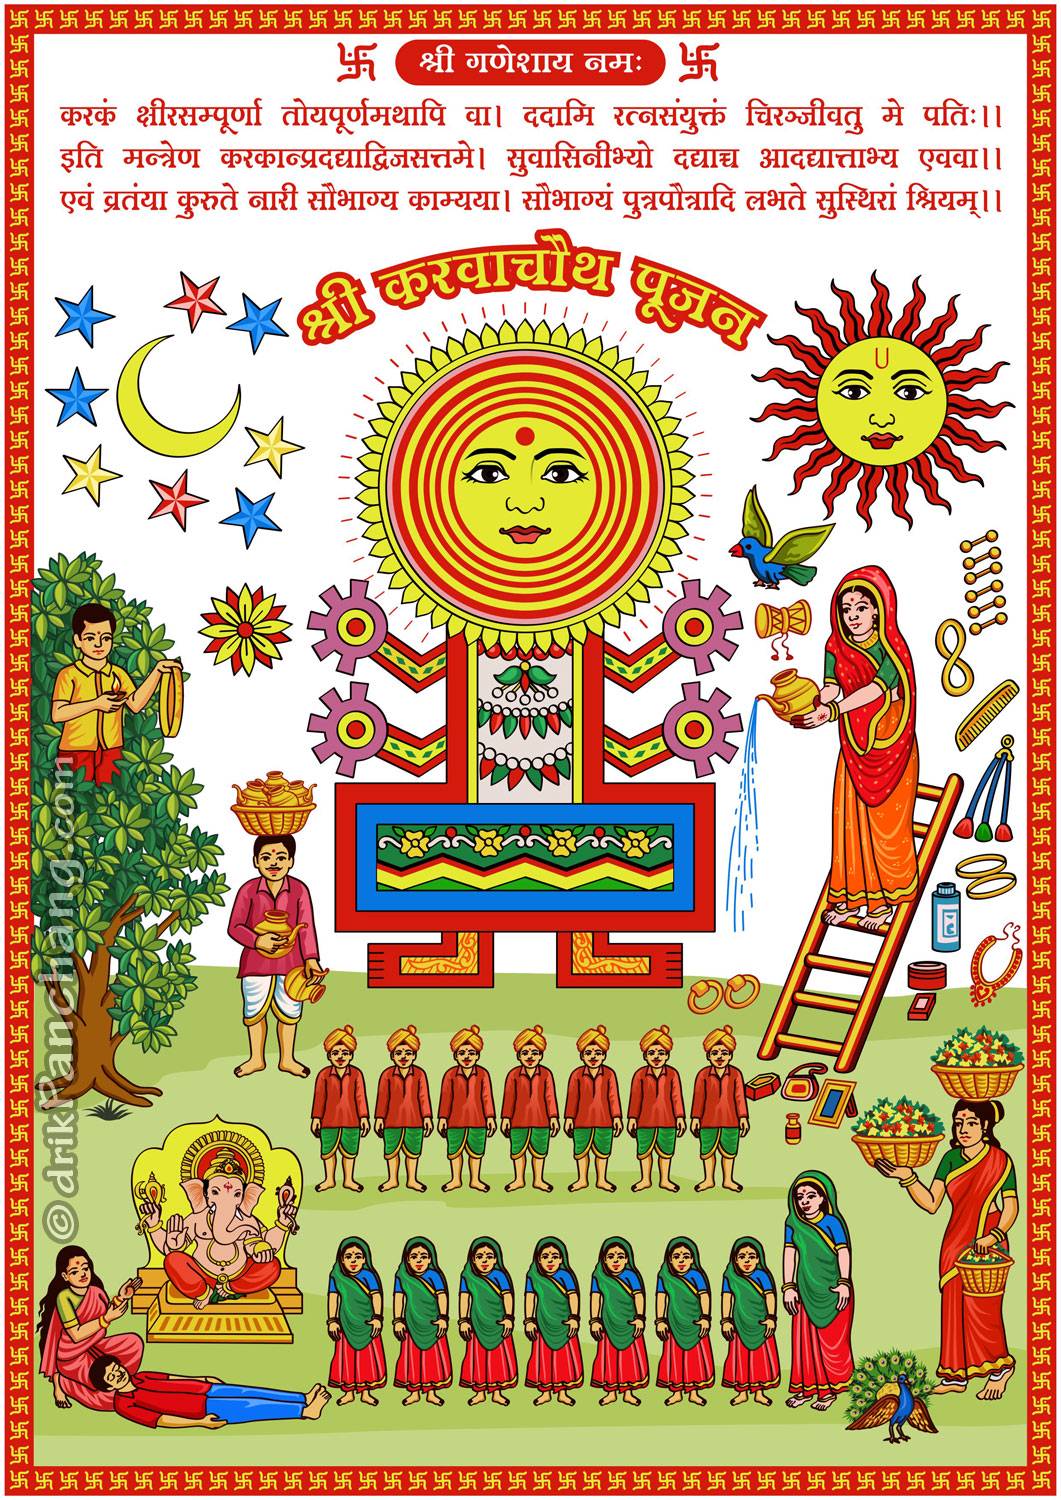 Karwa Chauth Puja Calendar | Full Wallpaper Size Karwa Chauth Calendar